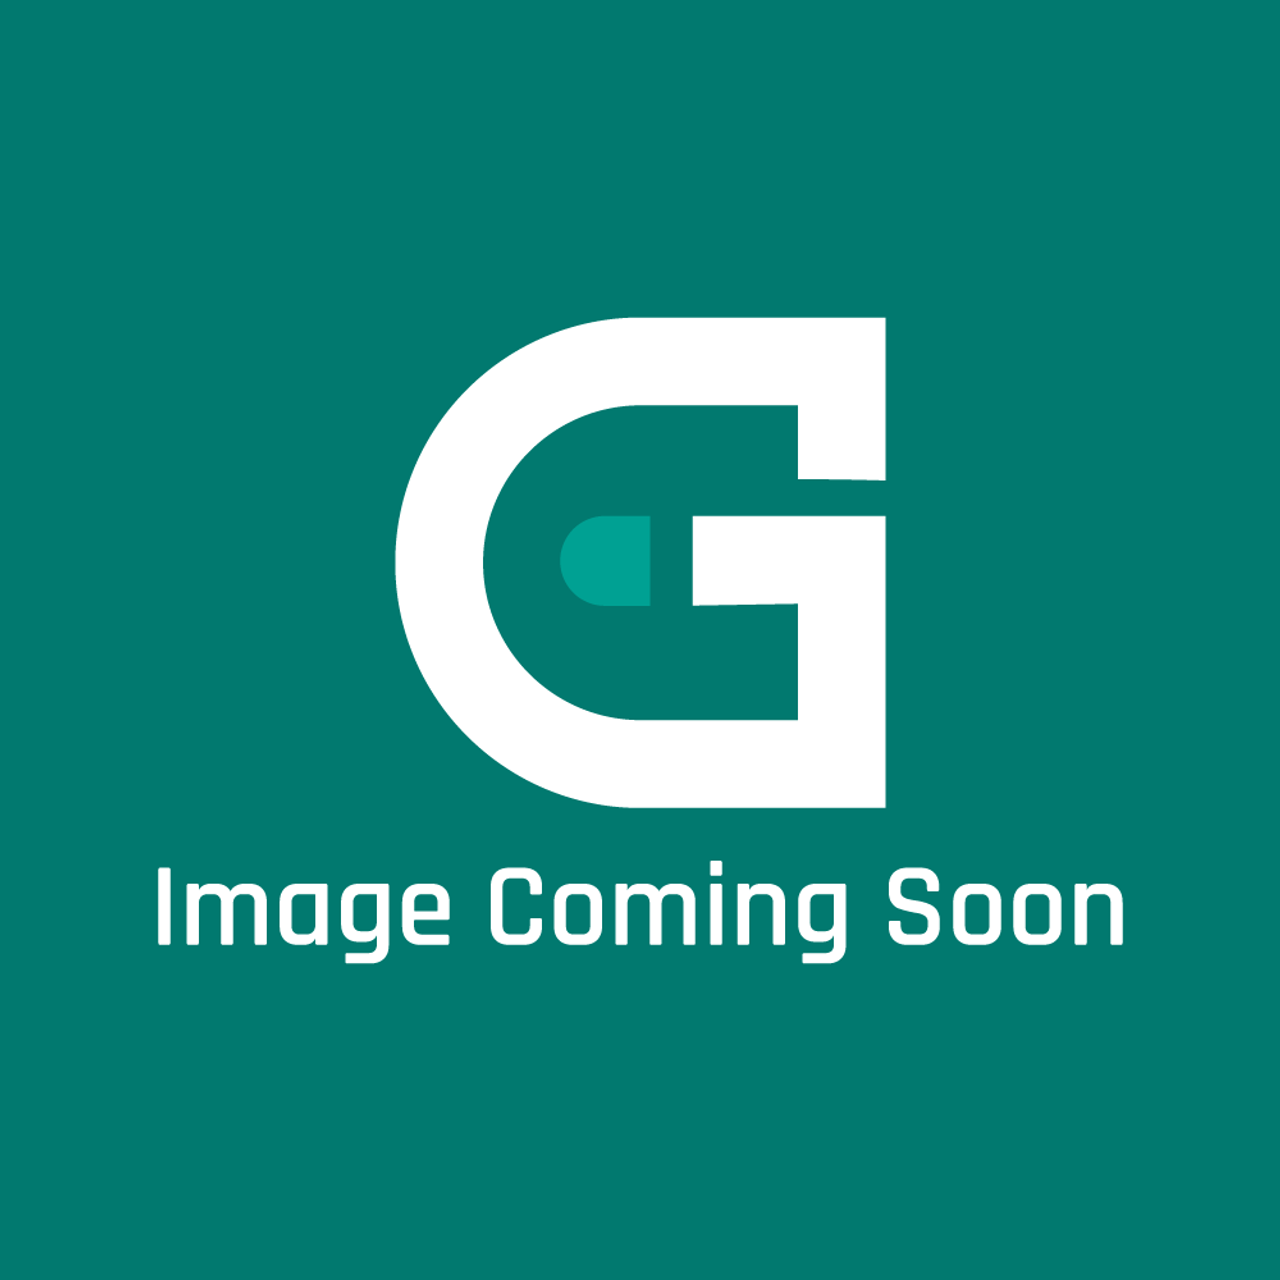 GE Appliances CIP75W2 - Optional Cafe Ice Maker Door Kit W1 - Image Coming Soon!